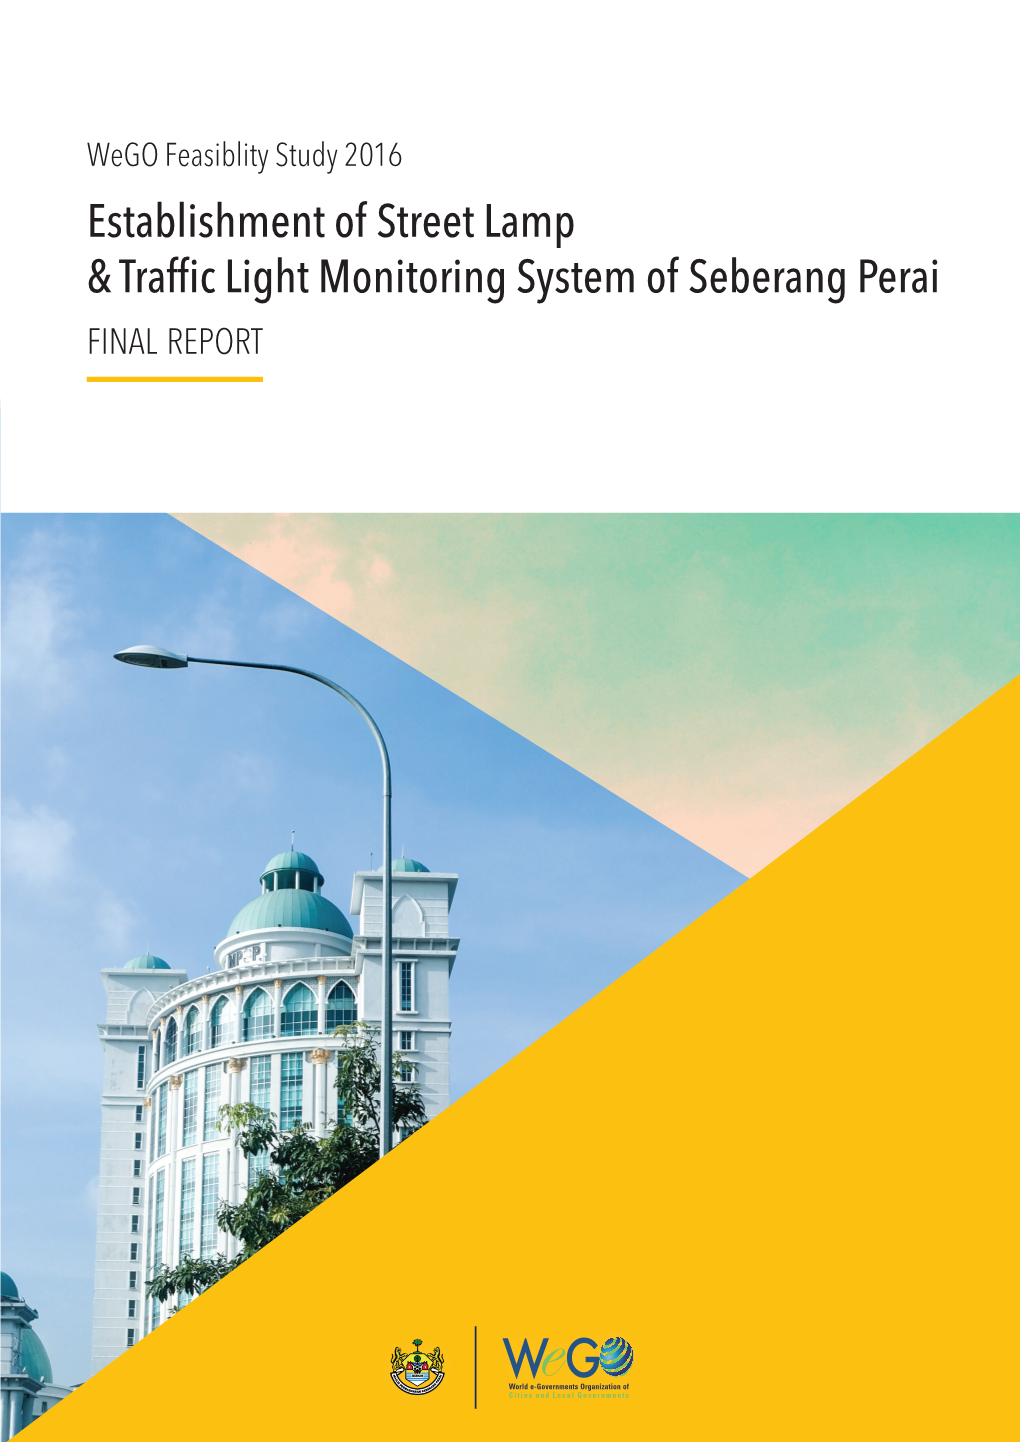 SEBERANG PERAI – Smart Street Lamp & Traffic Light Monitoring